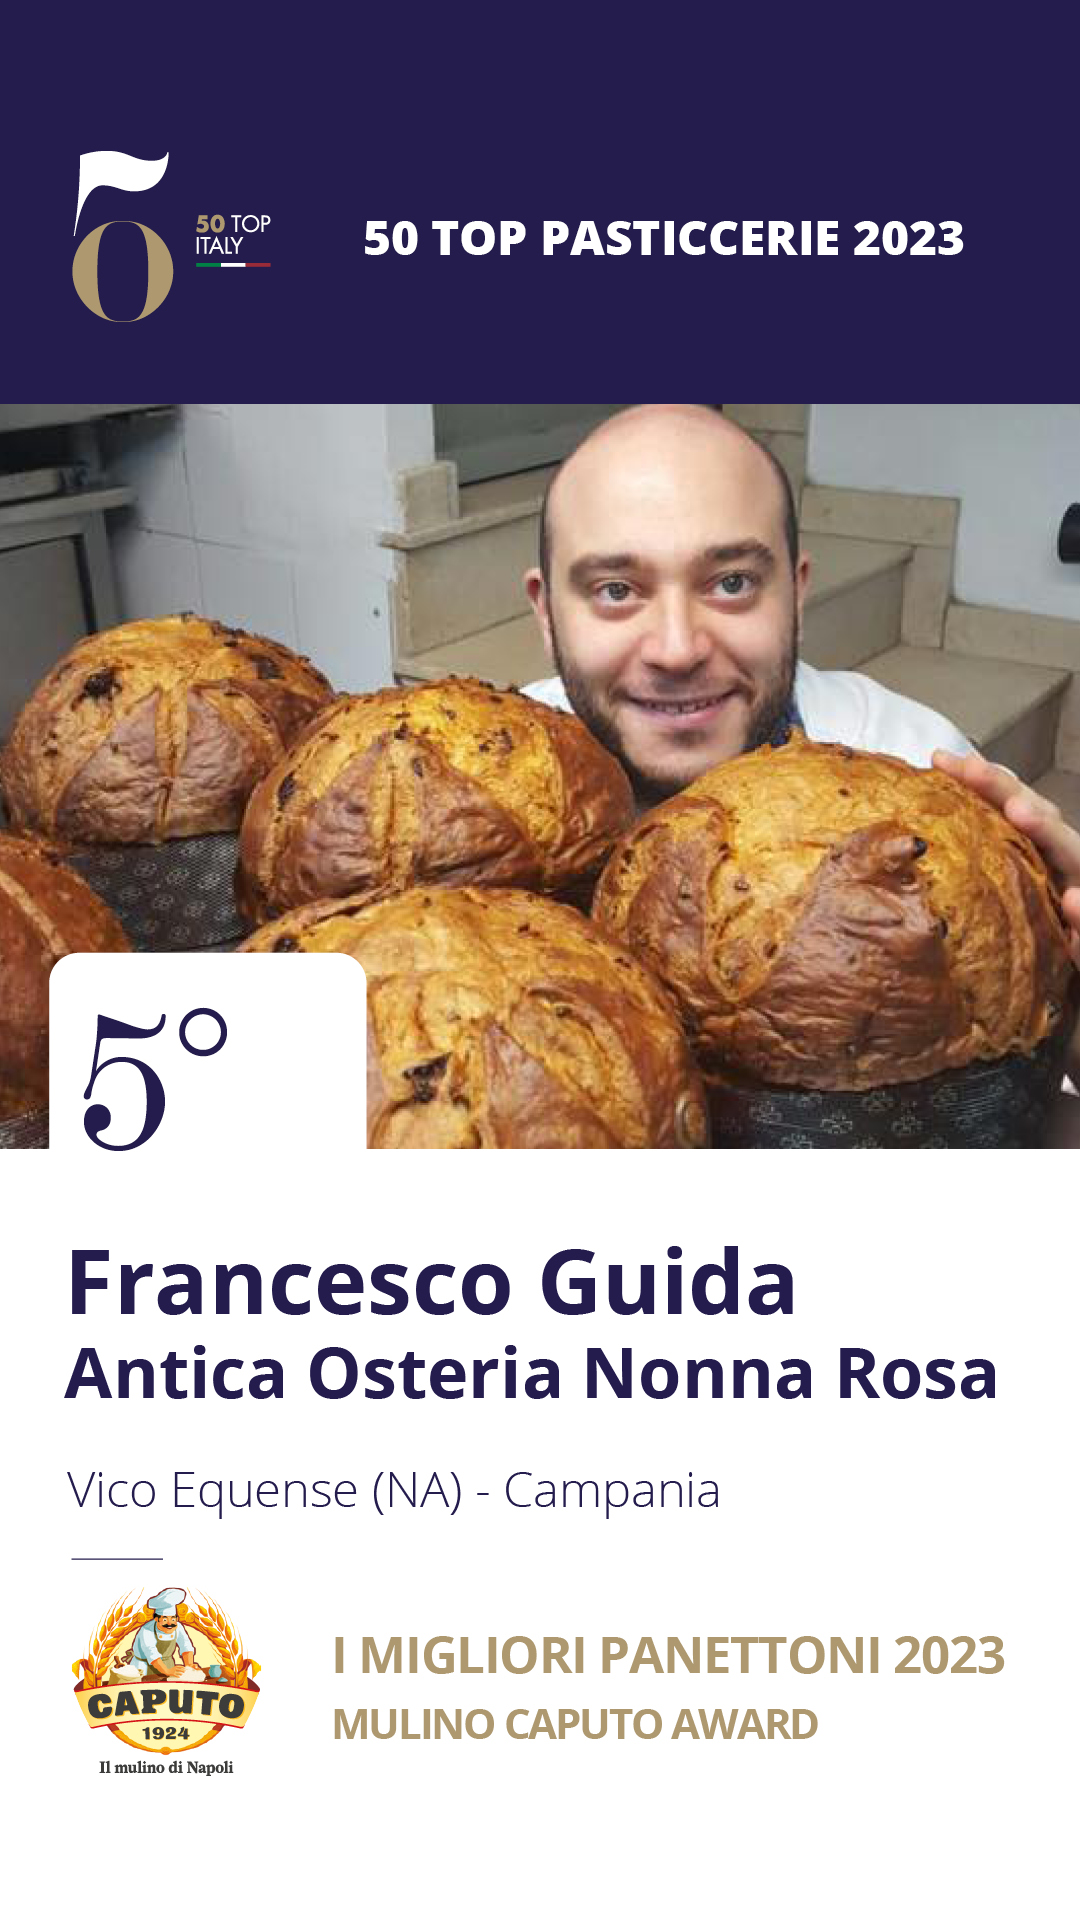 5 - Francesco Guida, Antica Osteria Nonna Rosa - Vico Equense (NA), Campania